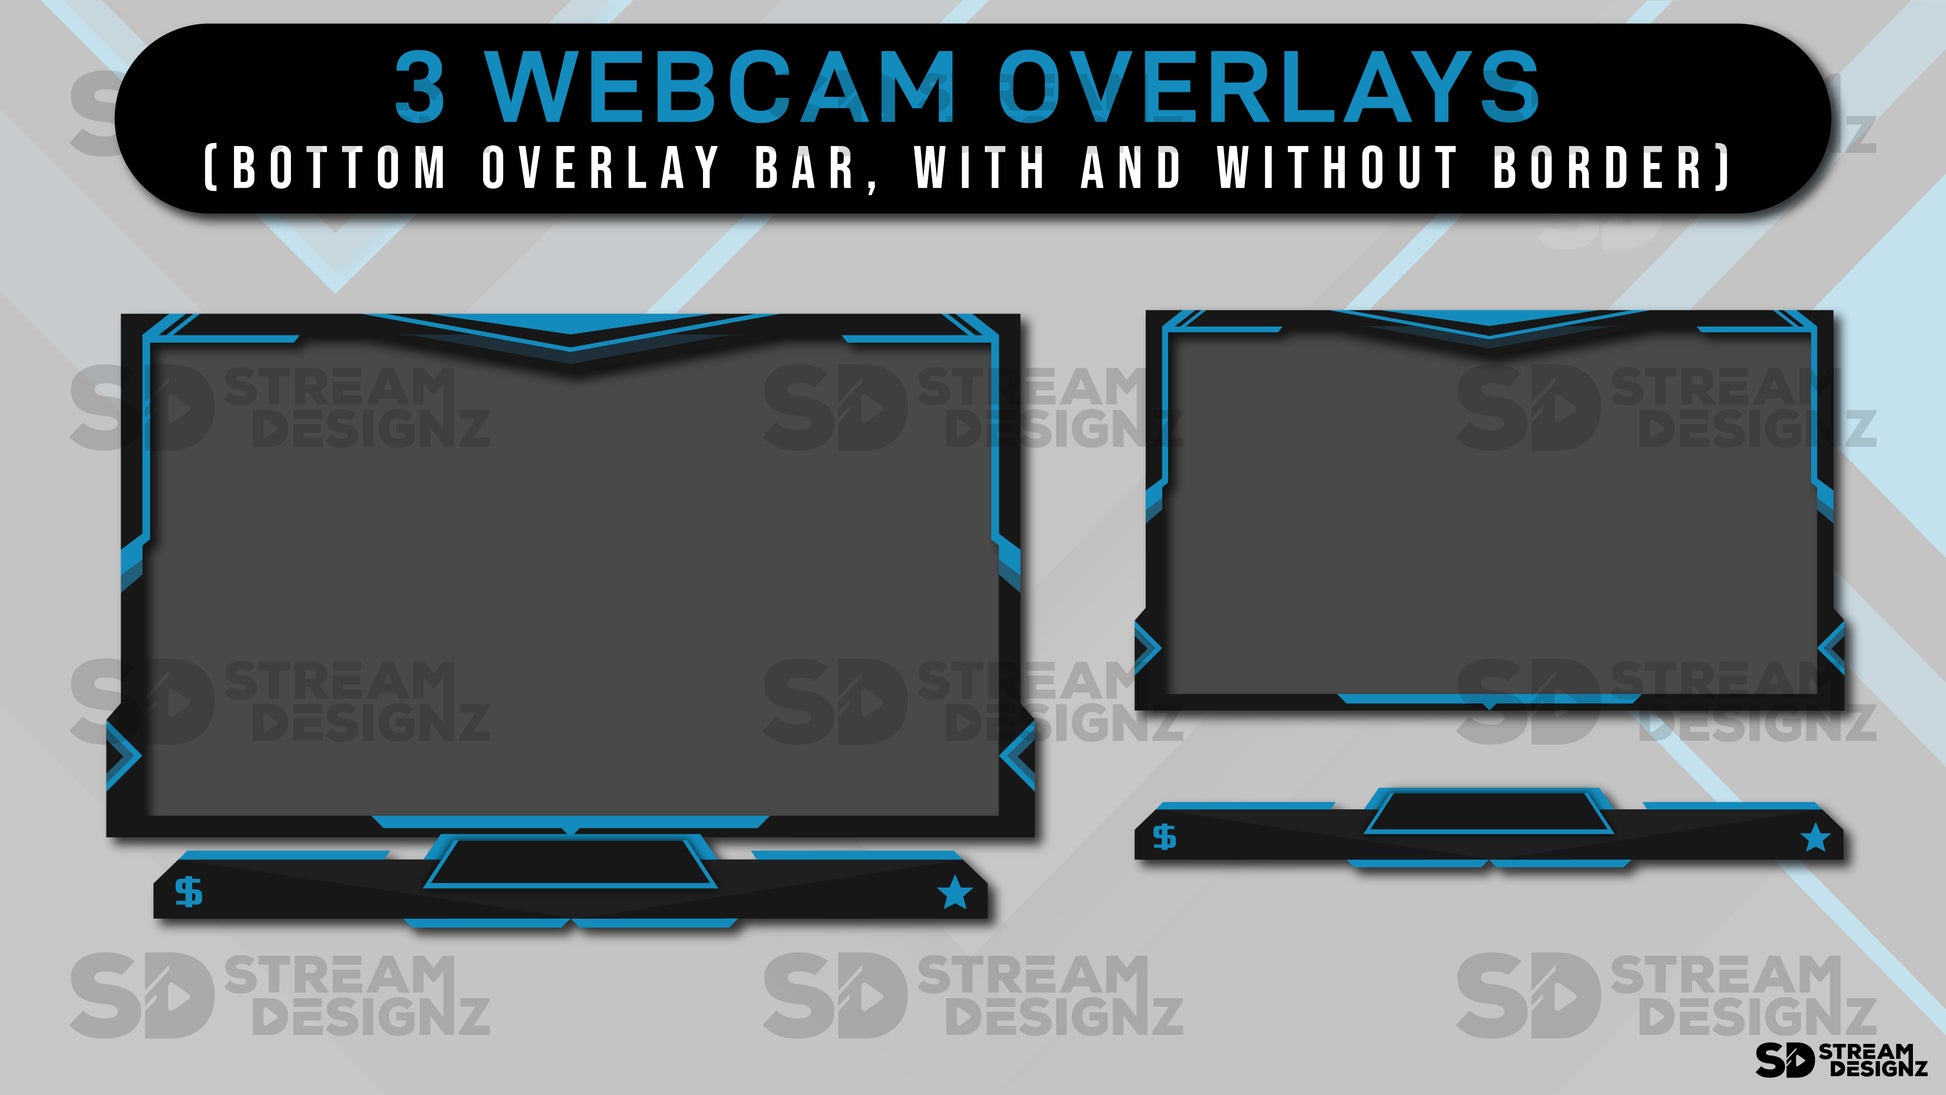 Animated stream overlay package electric webcam overlays stream designz